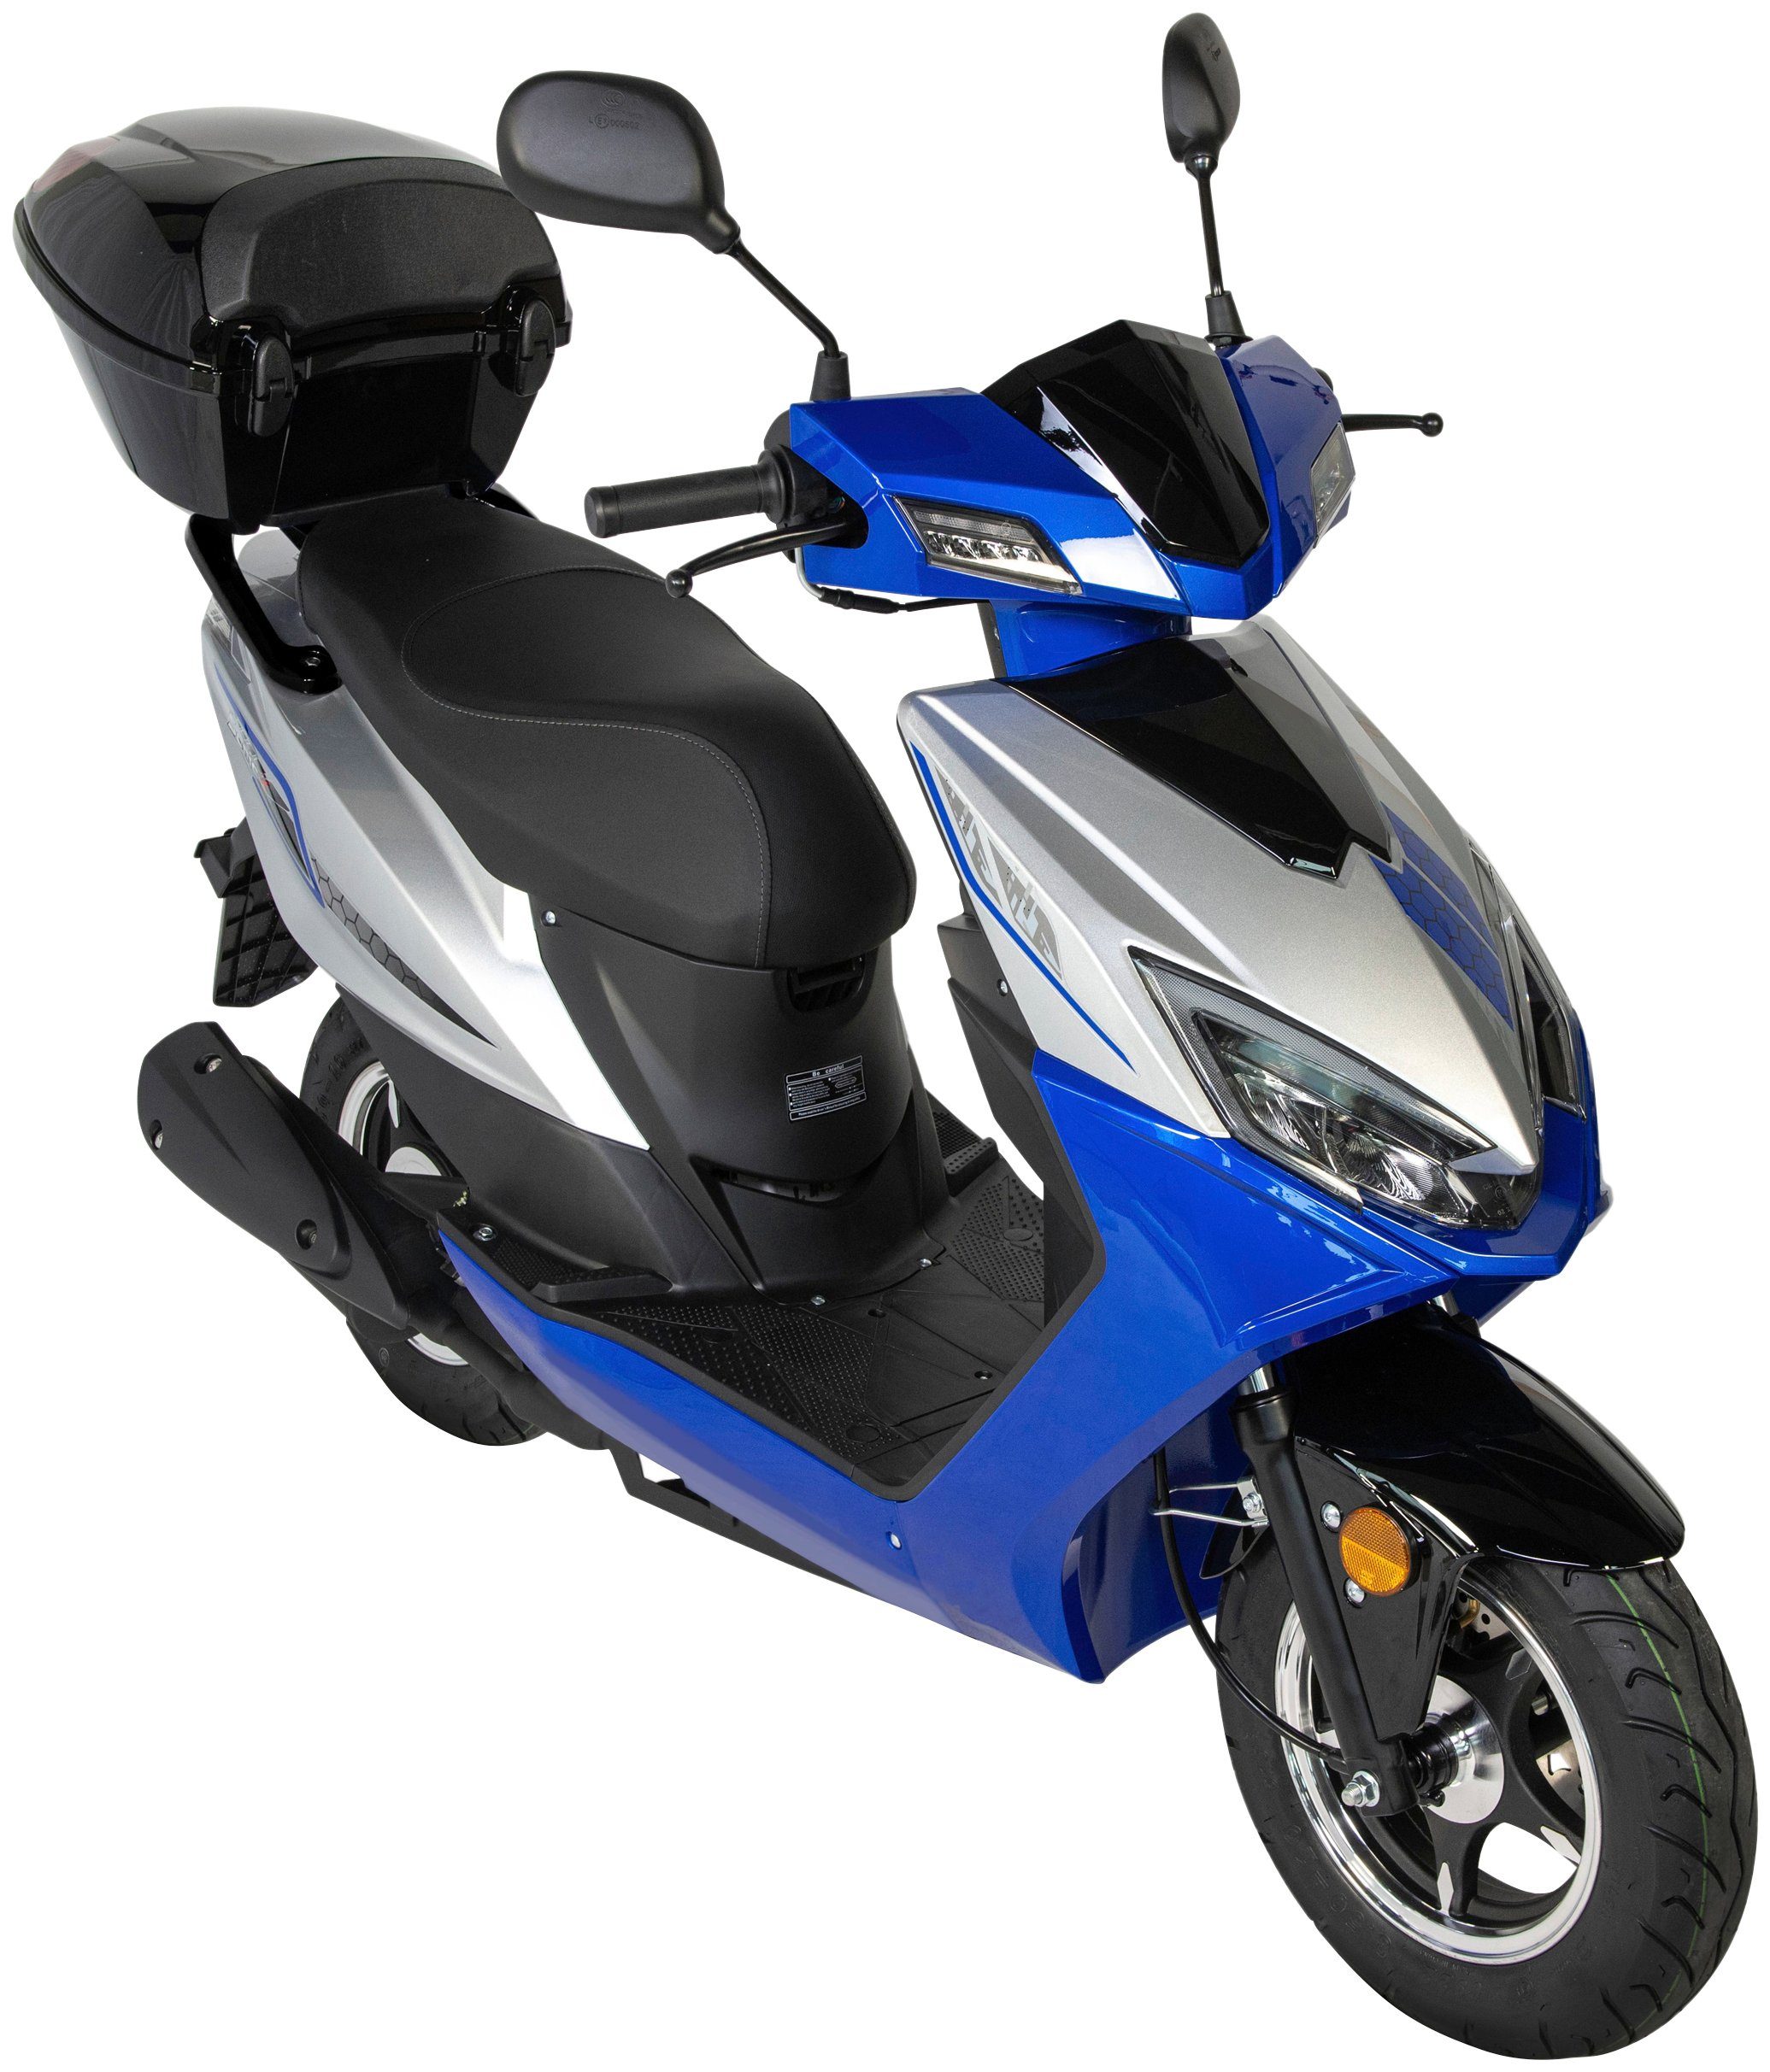 GT UNION Motorroller Sonic X 50-45, 50 ccm, 45 km/h, Euro 5, (Komplett-Set, 2 tlg., mit Topcase), inkl. Topcase königsblau-silber